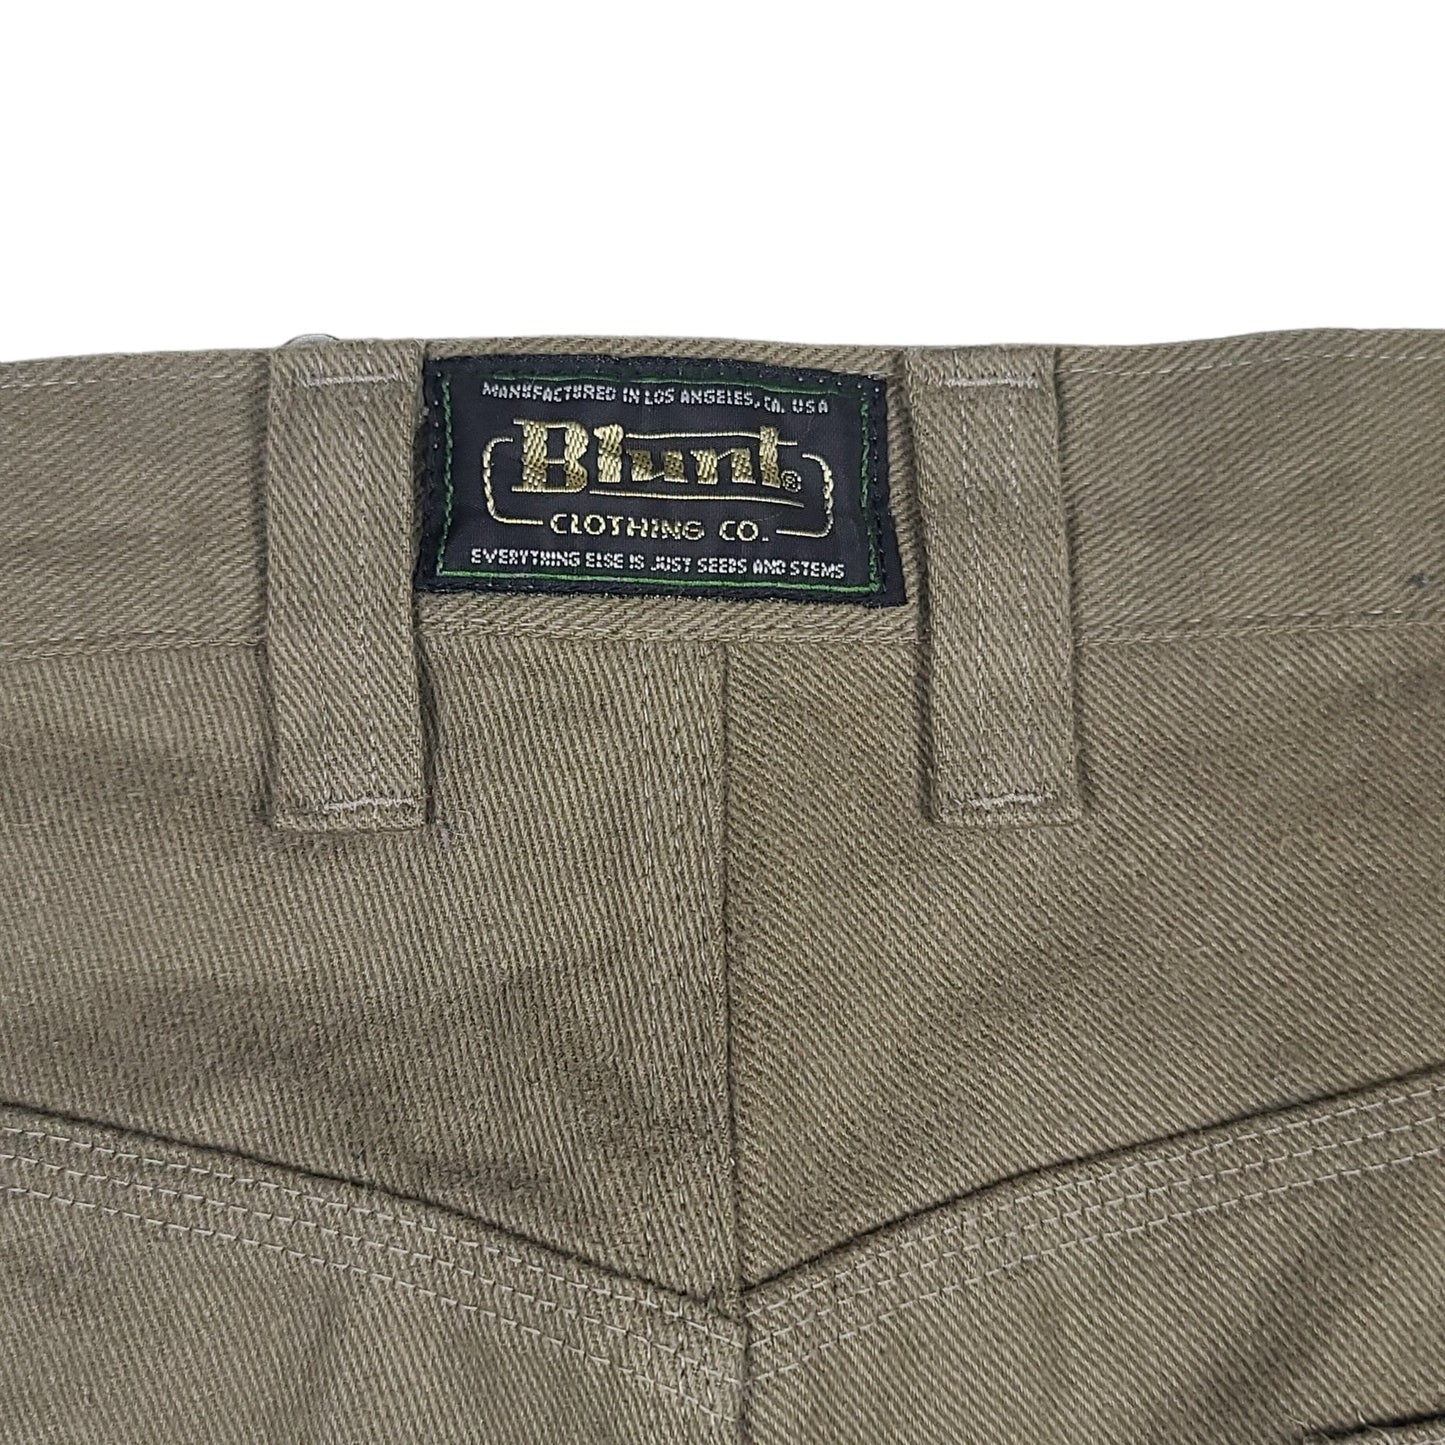 Vintage Olive Khaki Blunt Pants